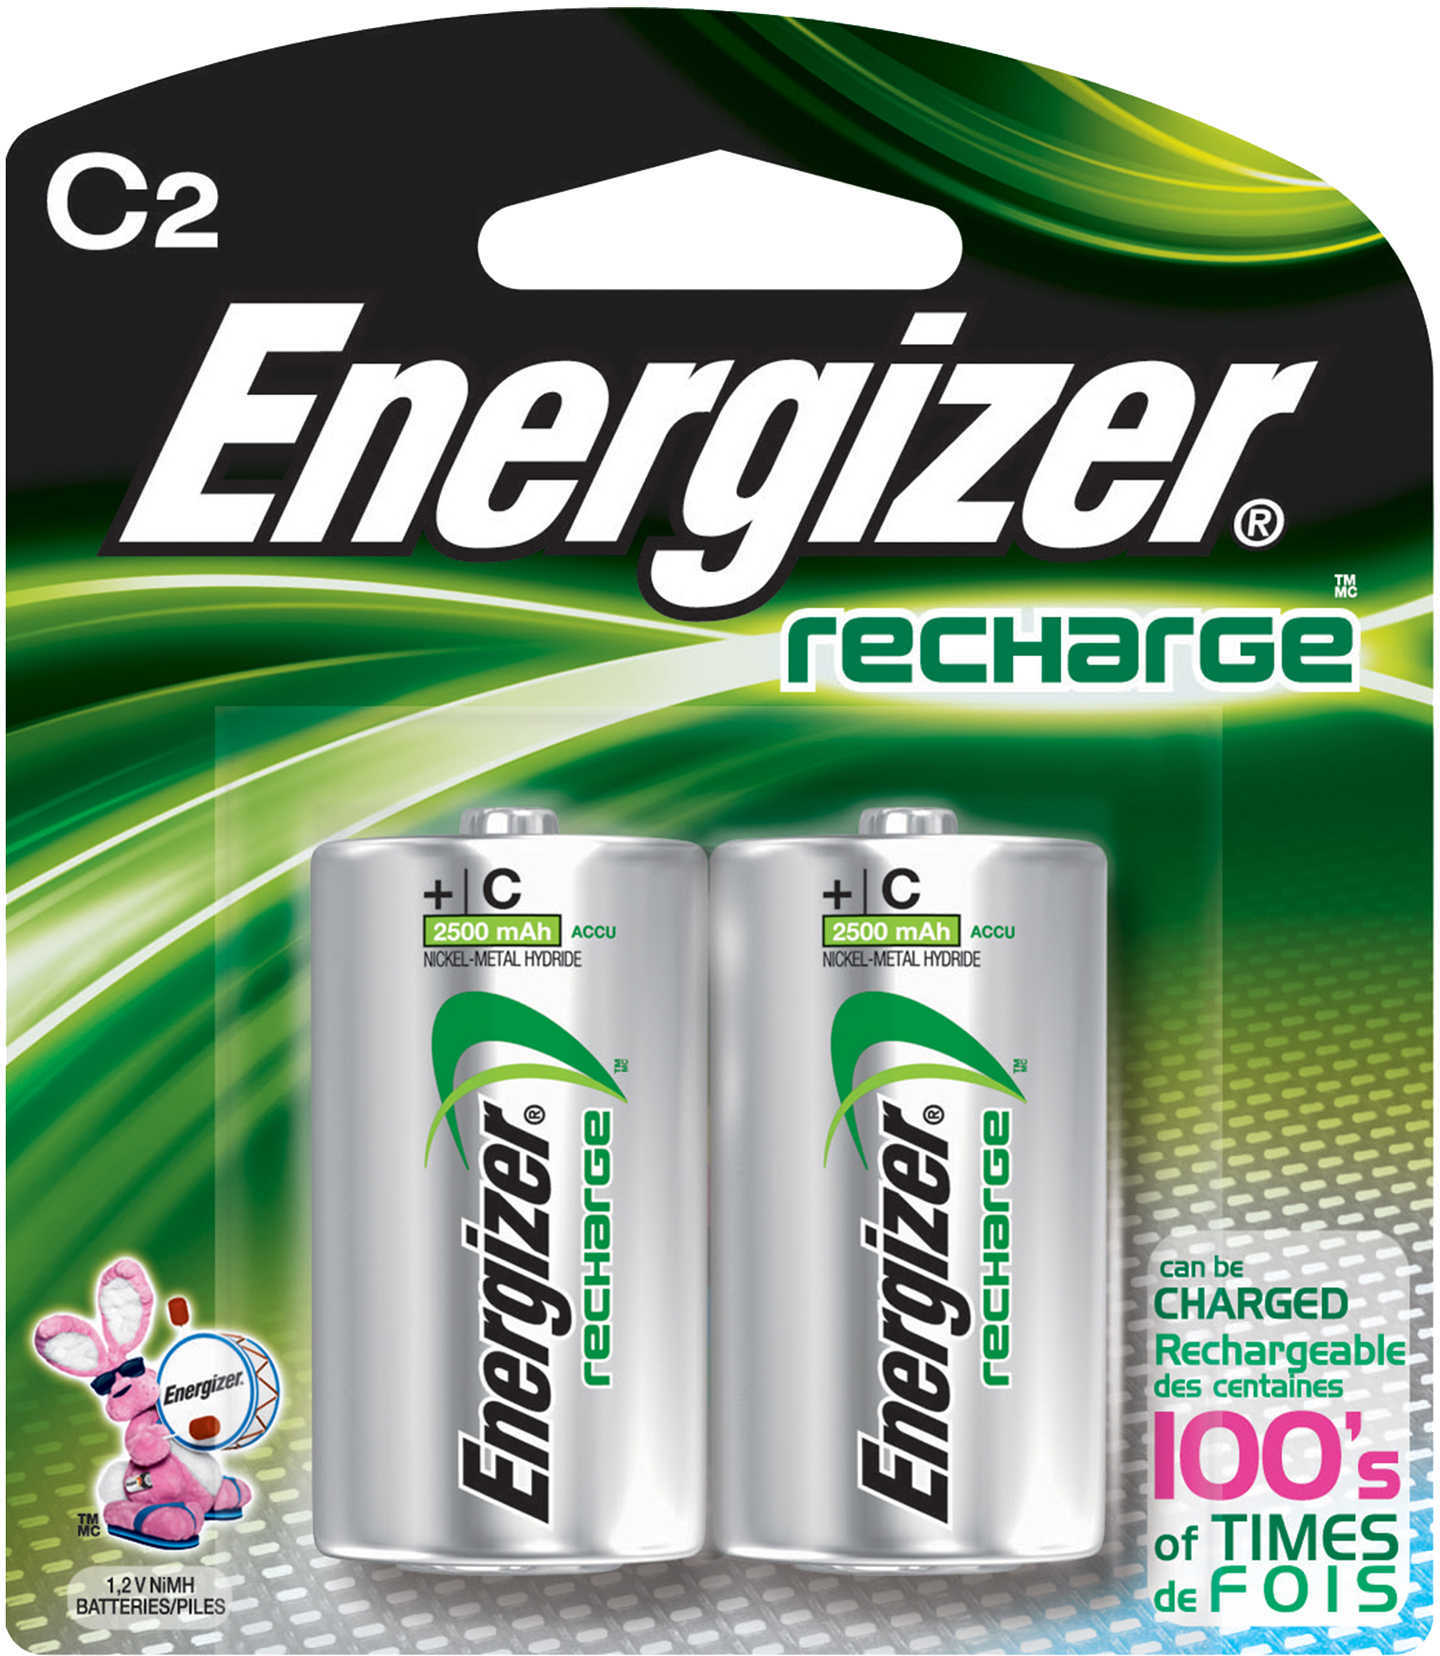 Energizer Recharge Batteries C2 Pack